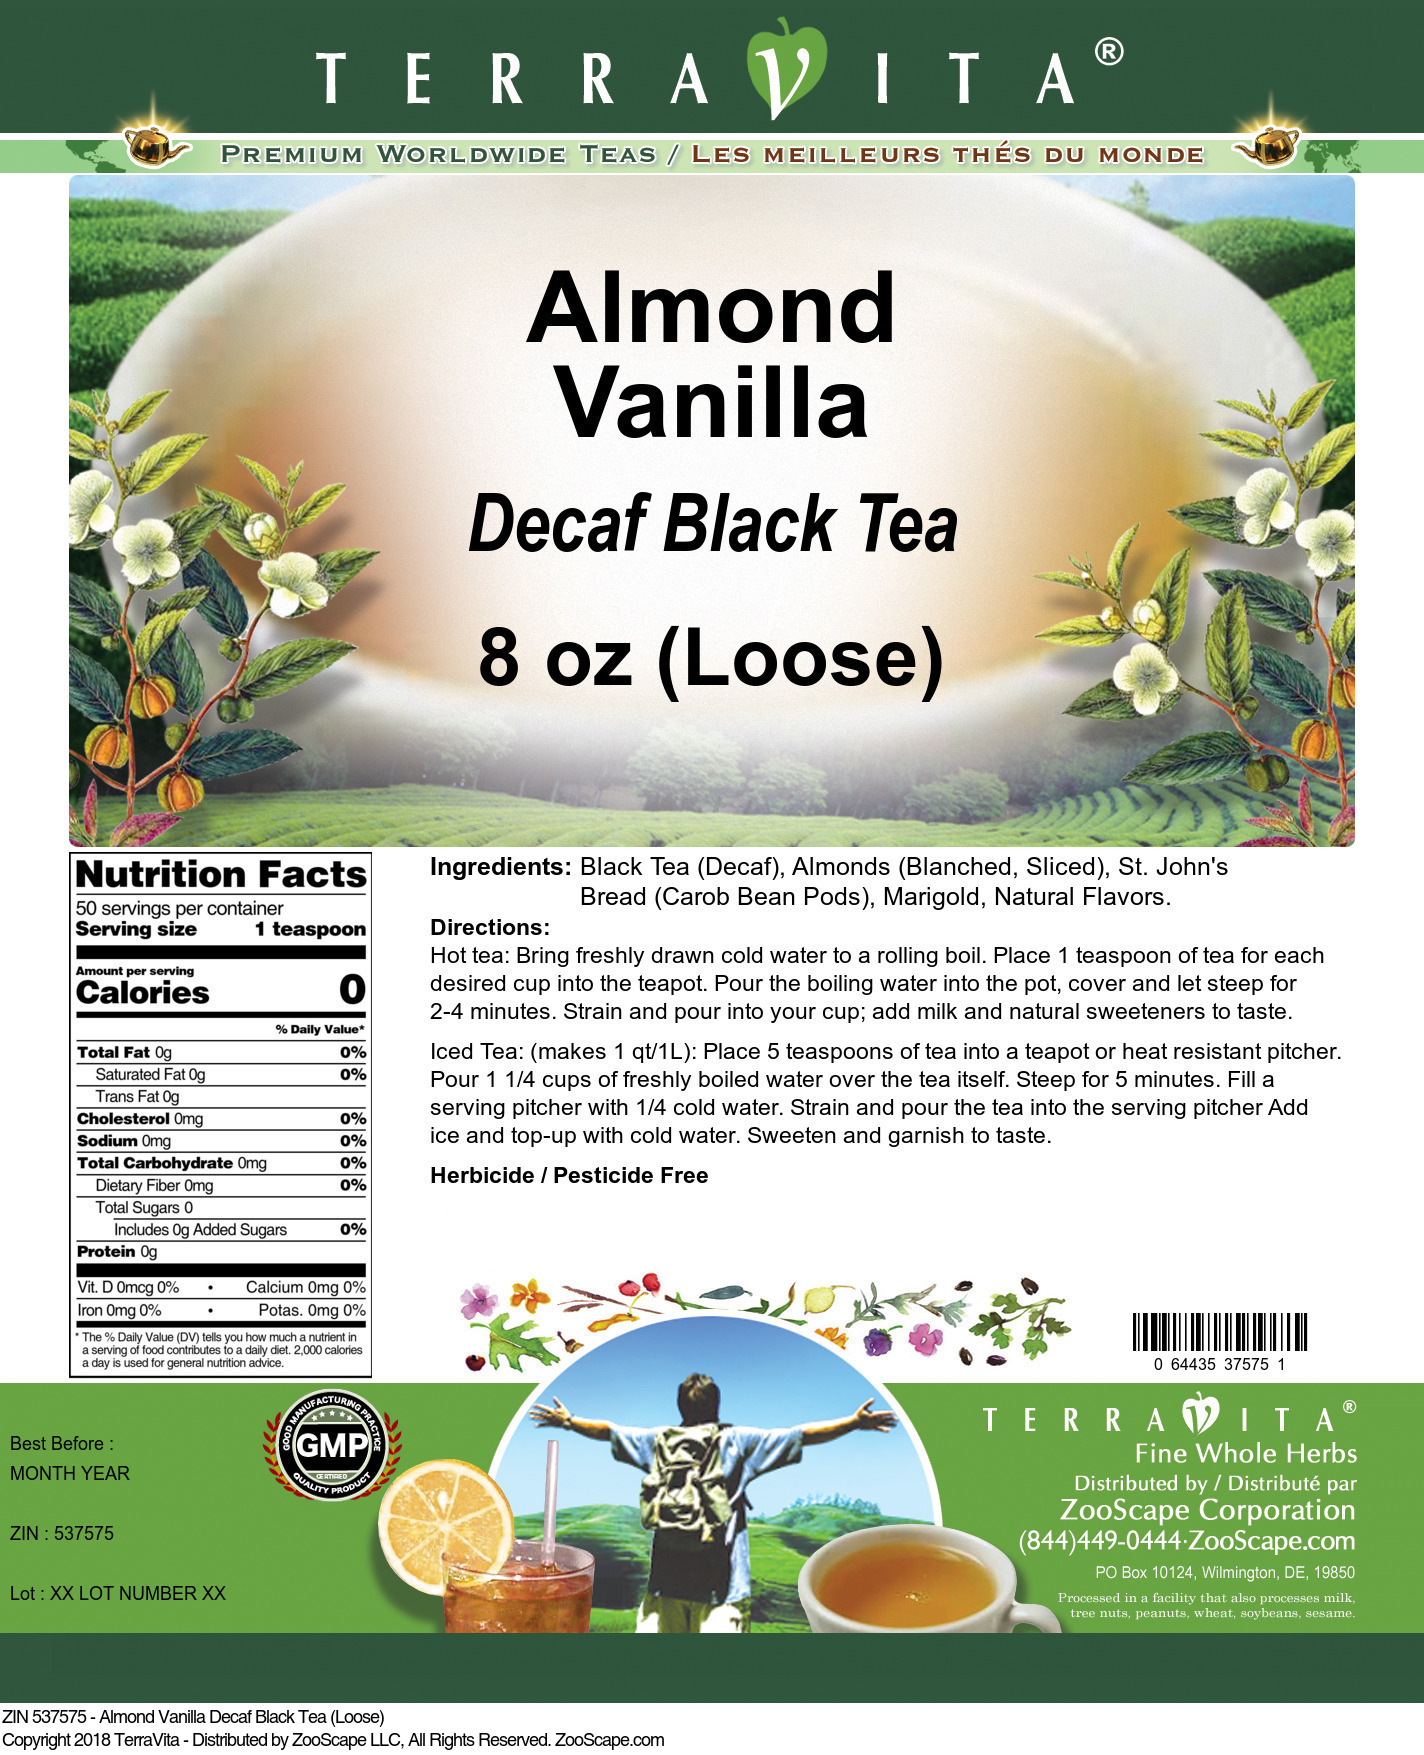 Almond Vanilla Decaf Black Tea (Loose) - Label